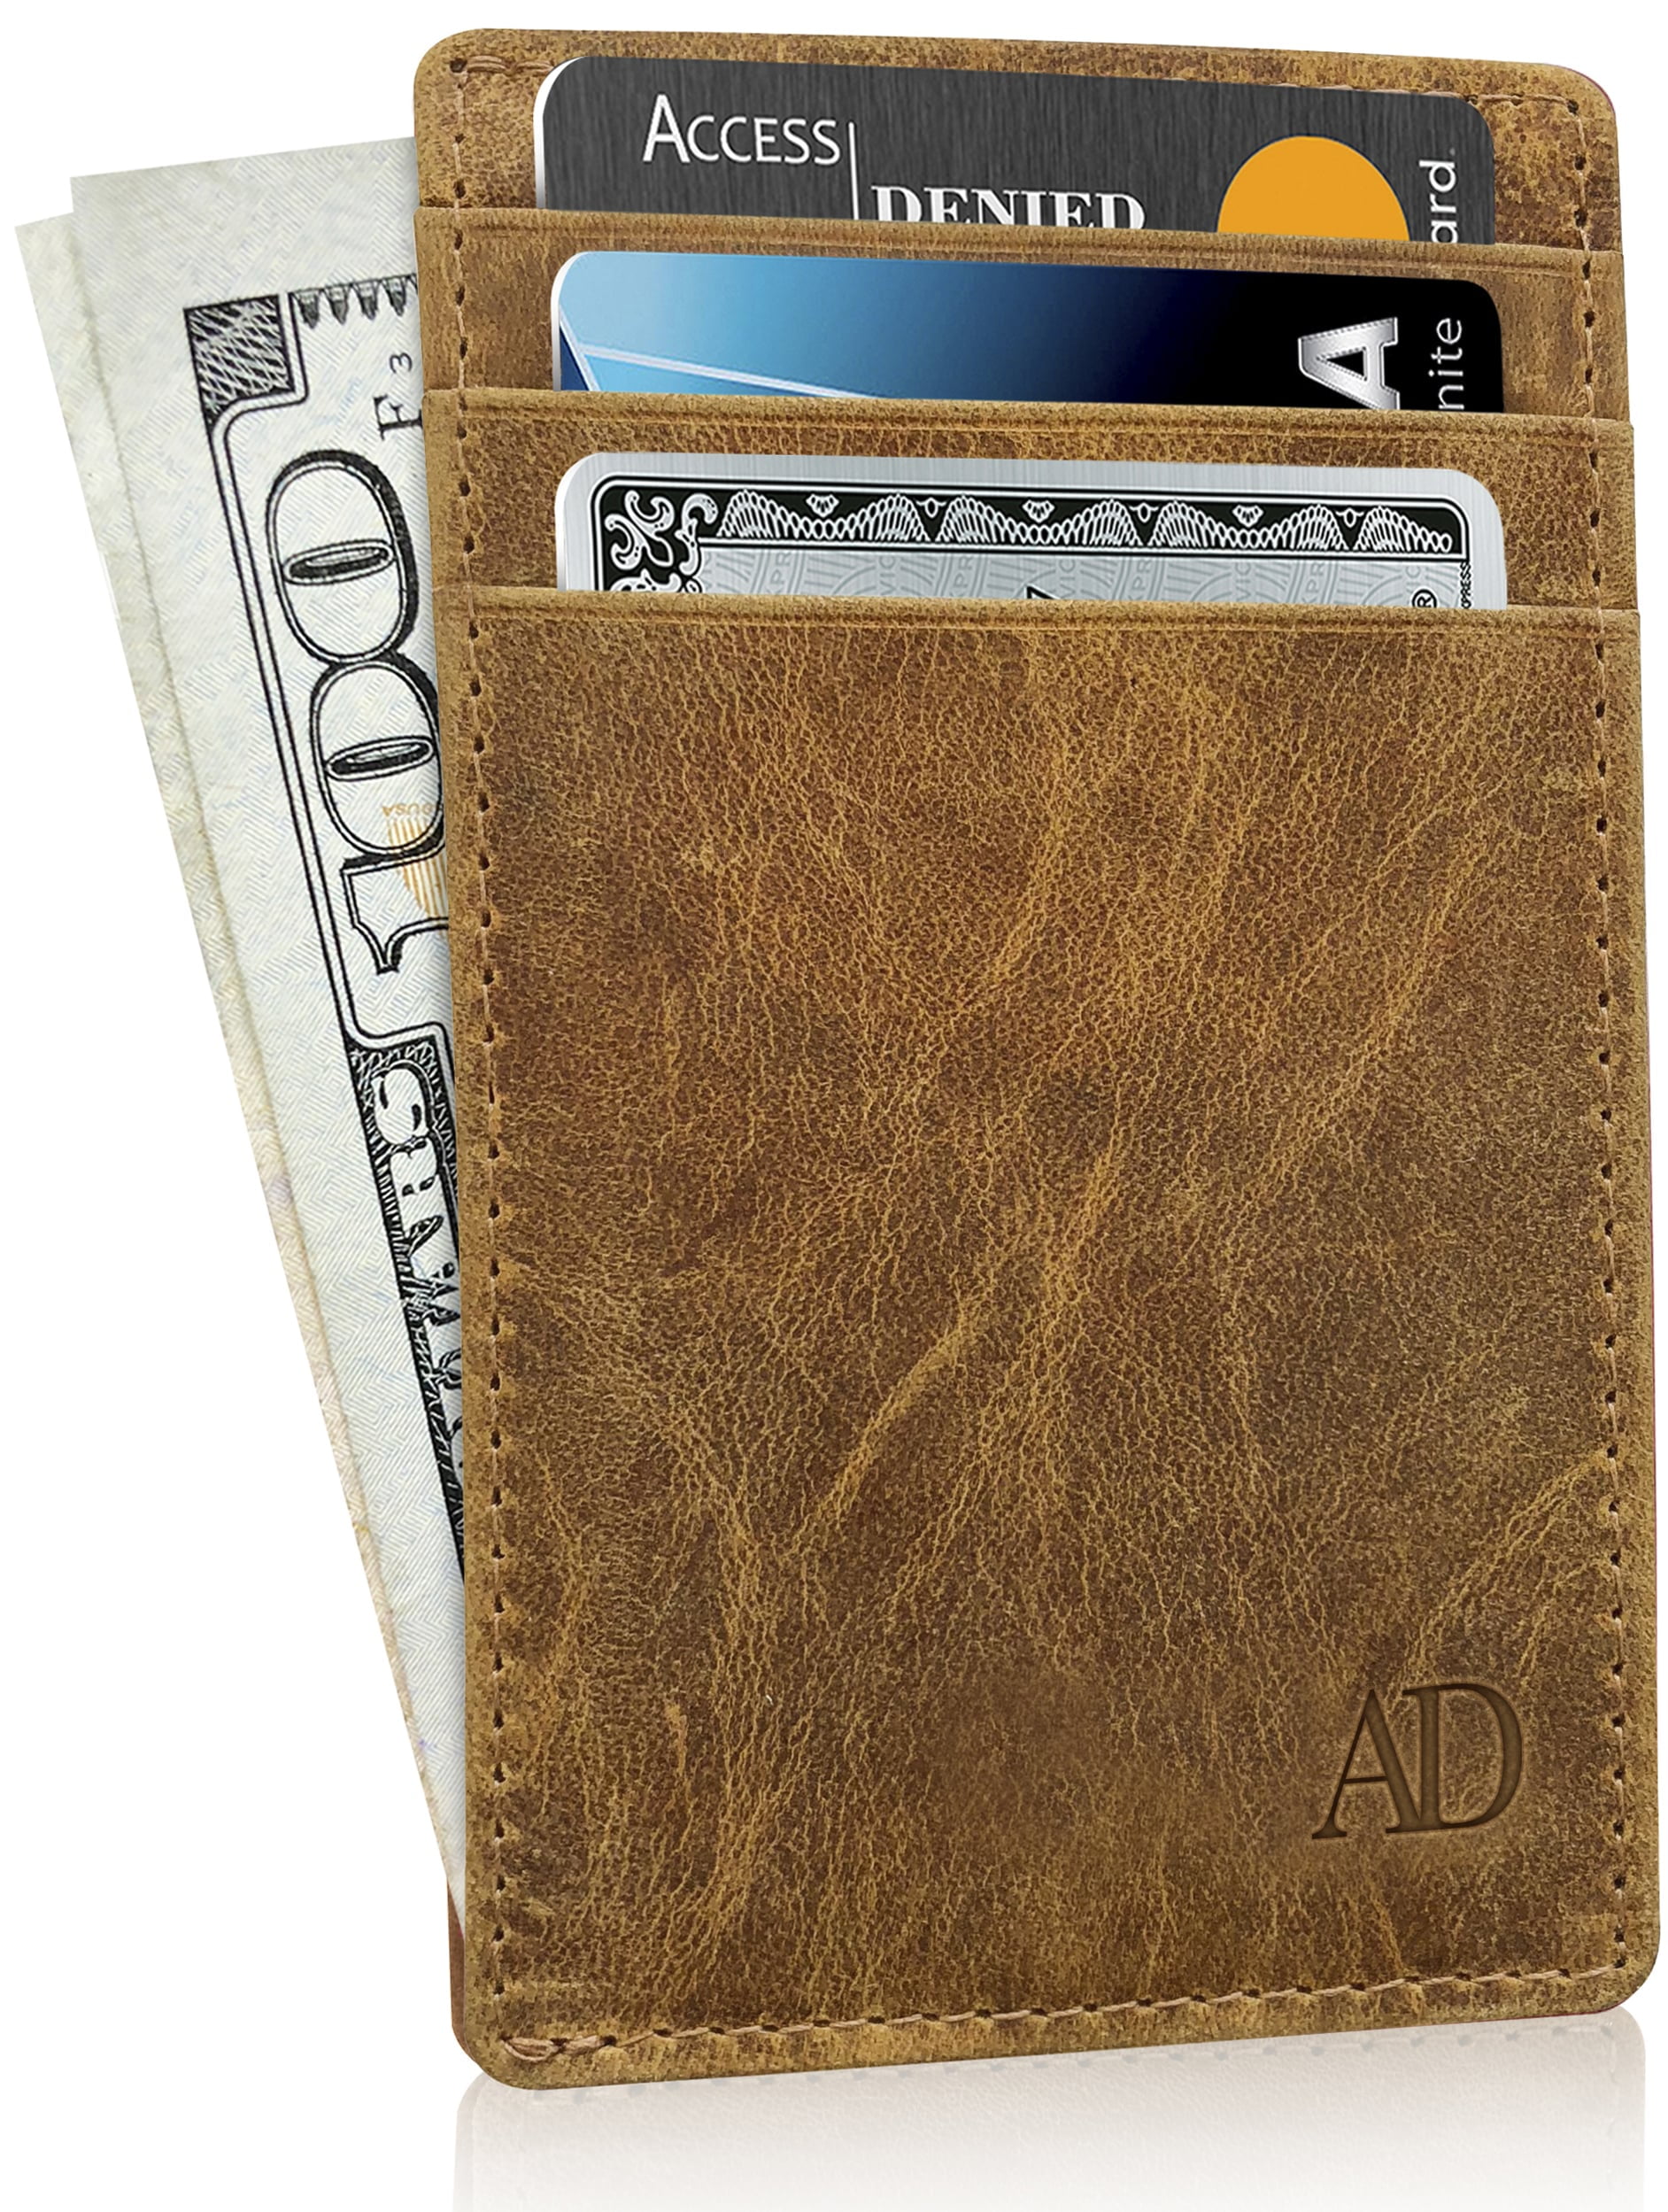 Hibate Slim Leather Credit Card Holder Case Wallet RFID Blocking for Men Women Brown